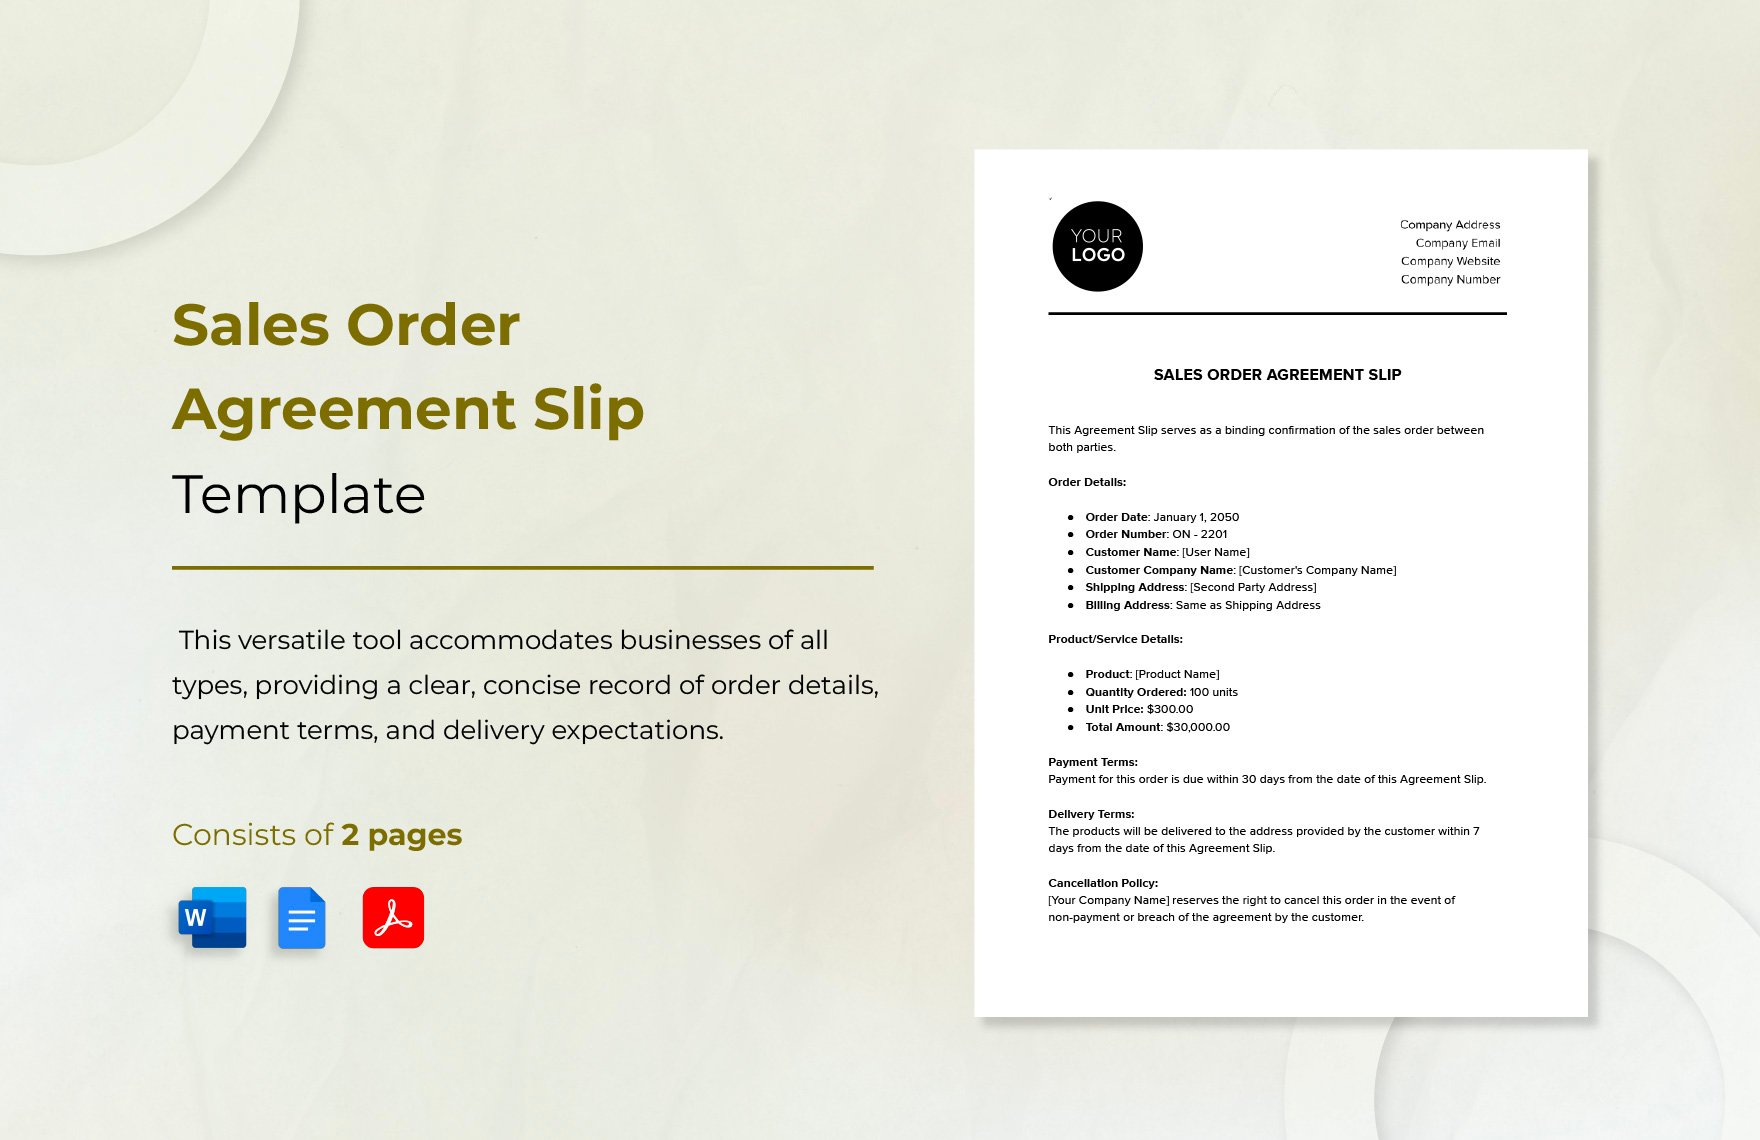 Sales Order Agreement Slip Template